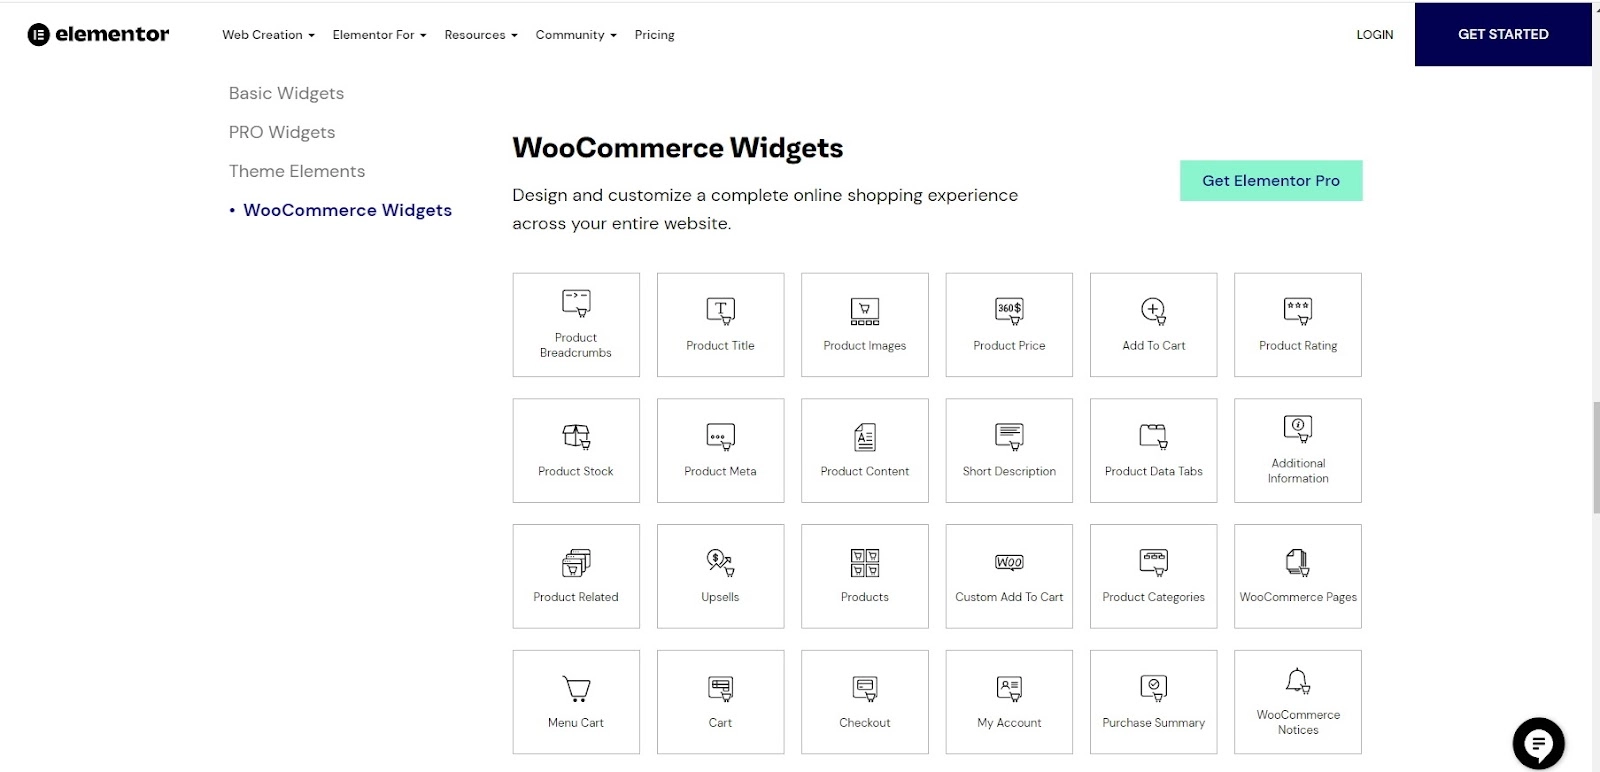 WooCommerce Widgets from Elementor